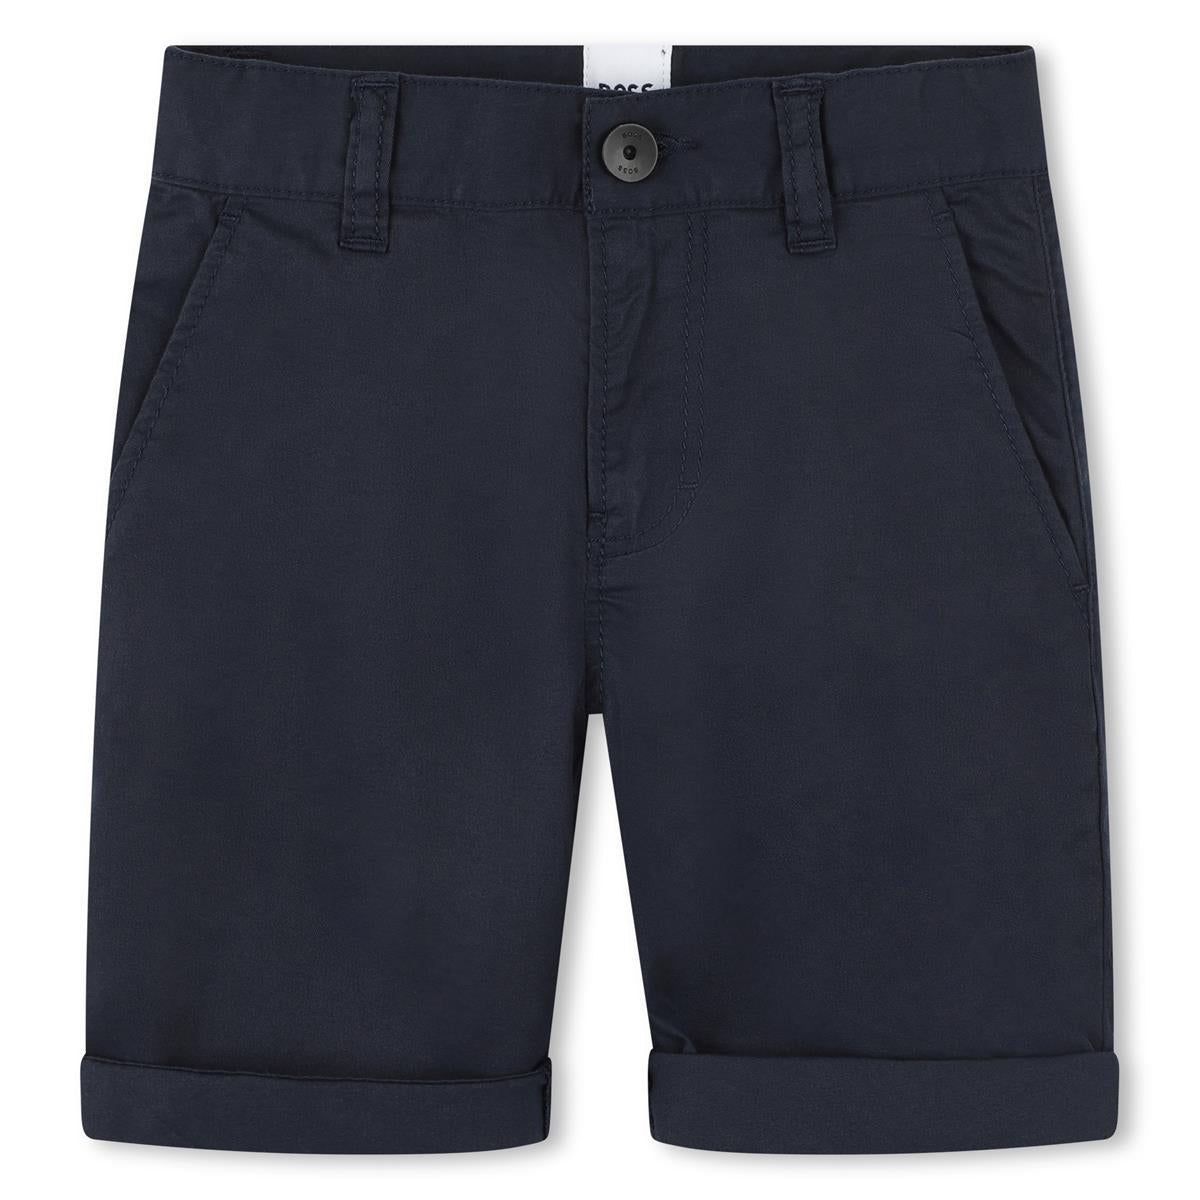 Boys Dark Blue Cotton Shorts